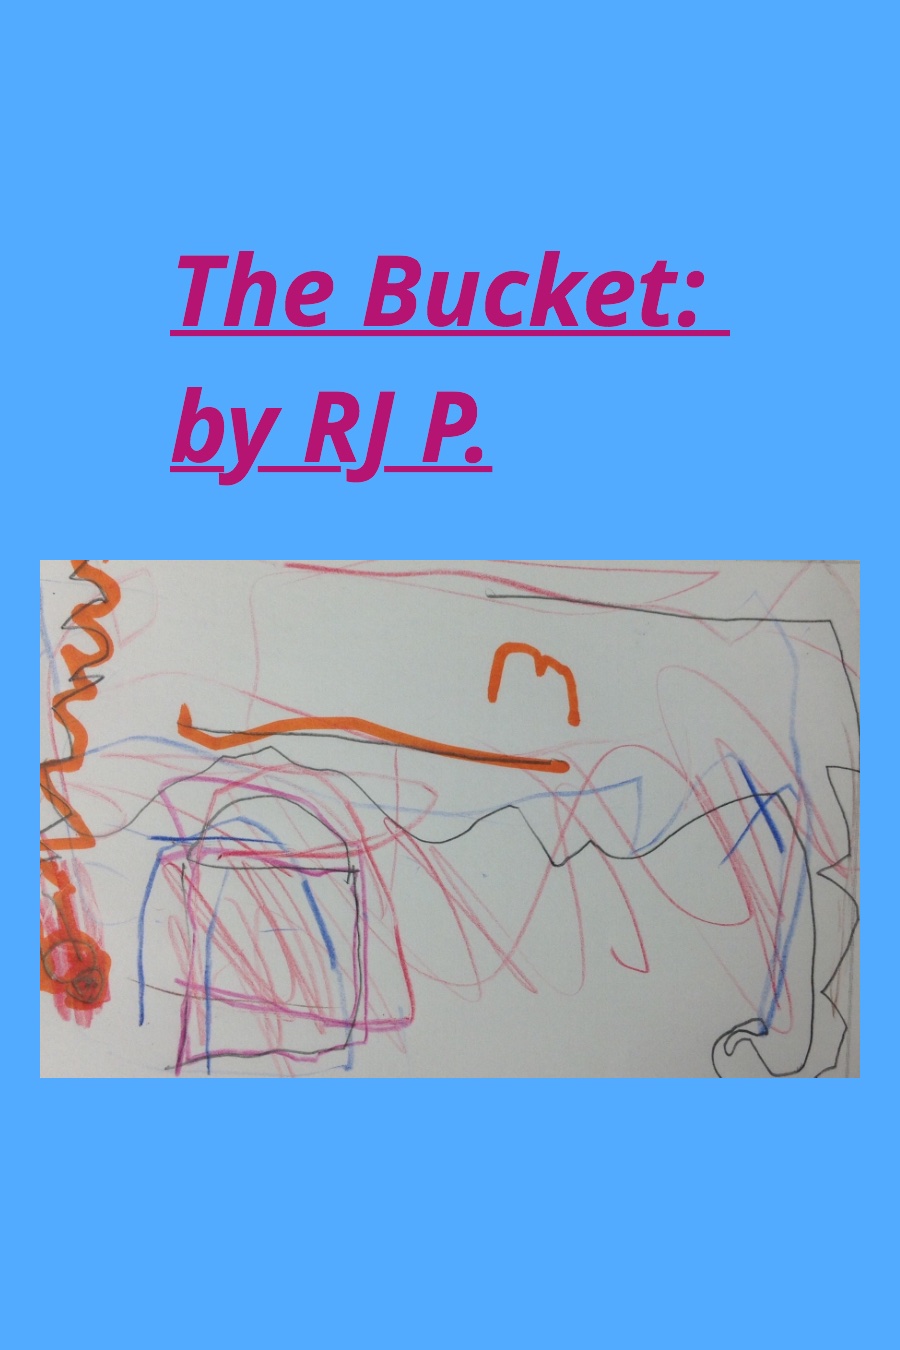 The Bucket by Robert RJ P